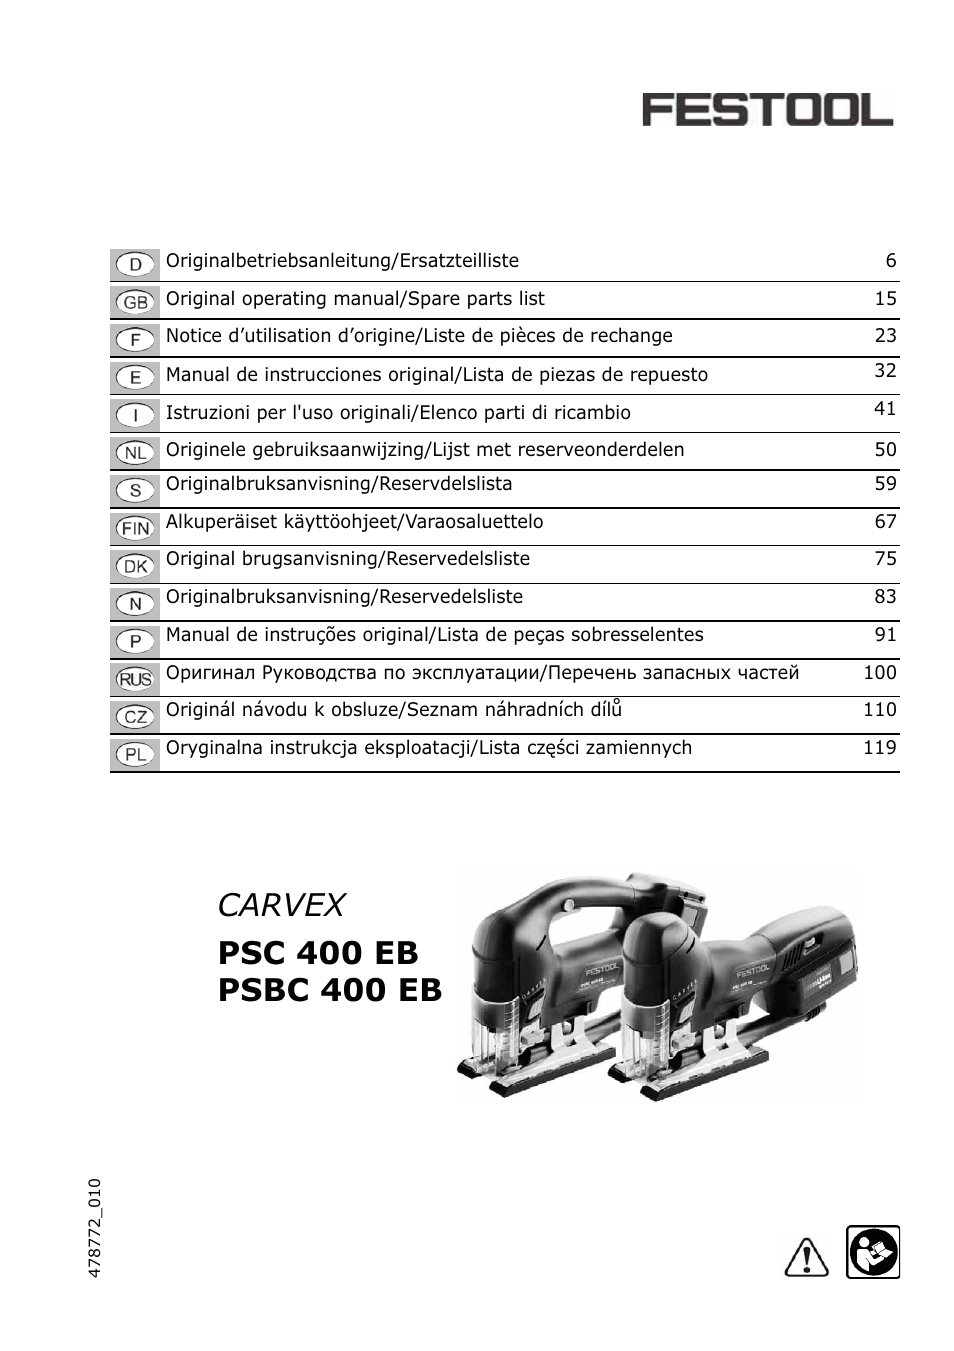 Festool PSBC 400 EB CARVEX User Manual | 132 pages